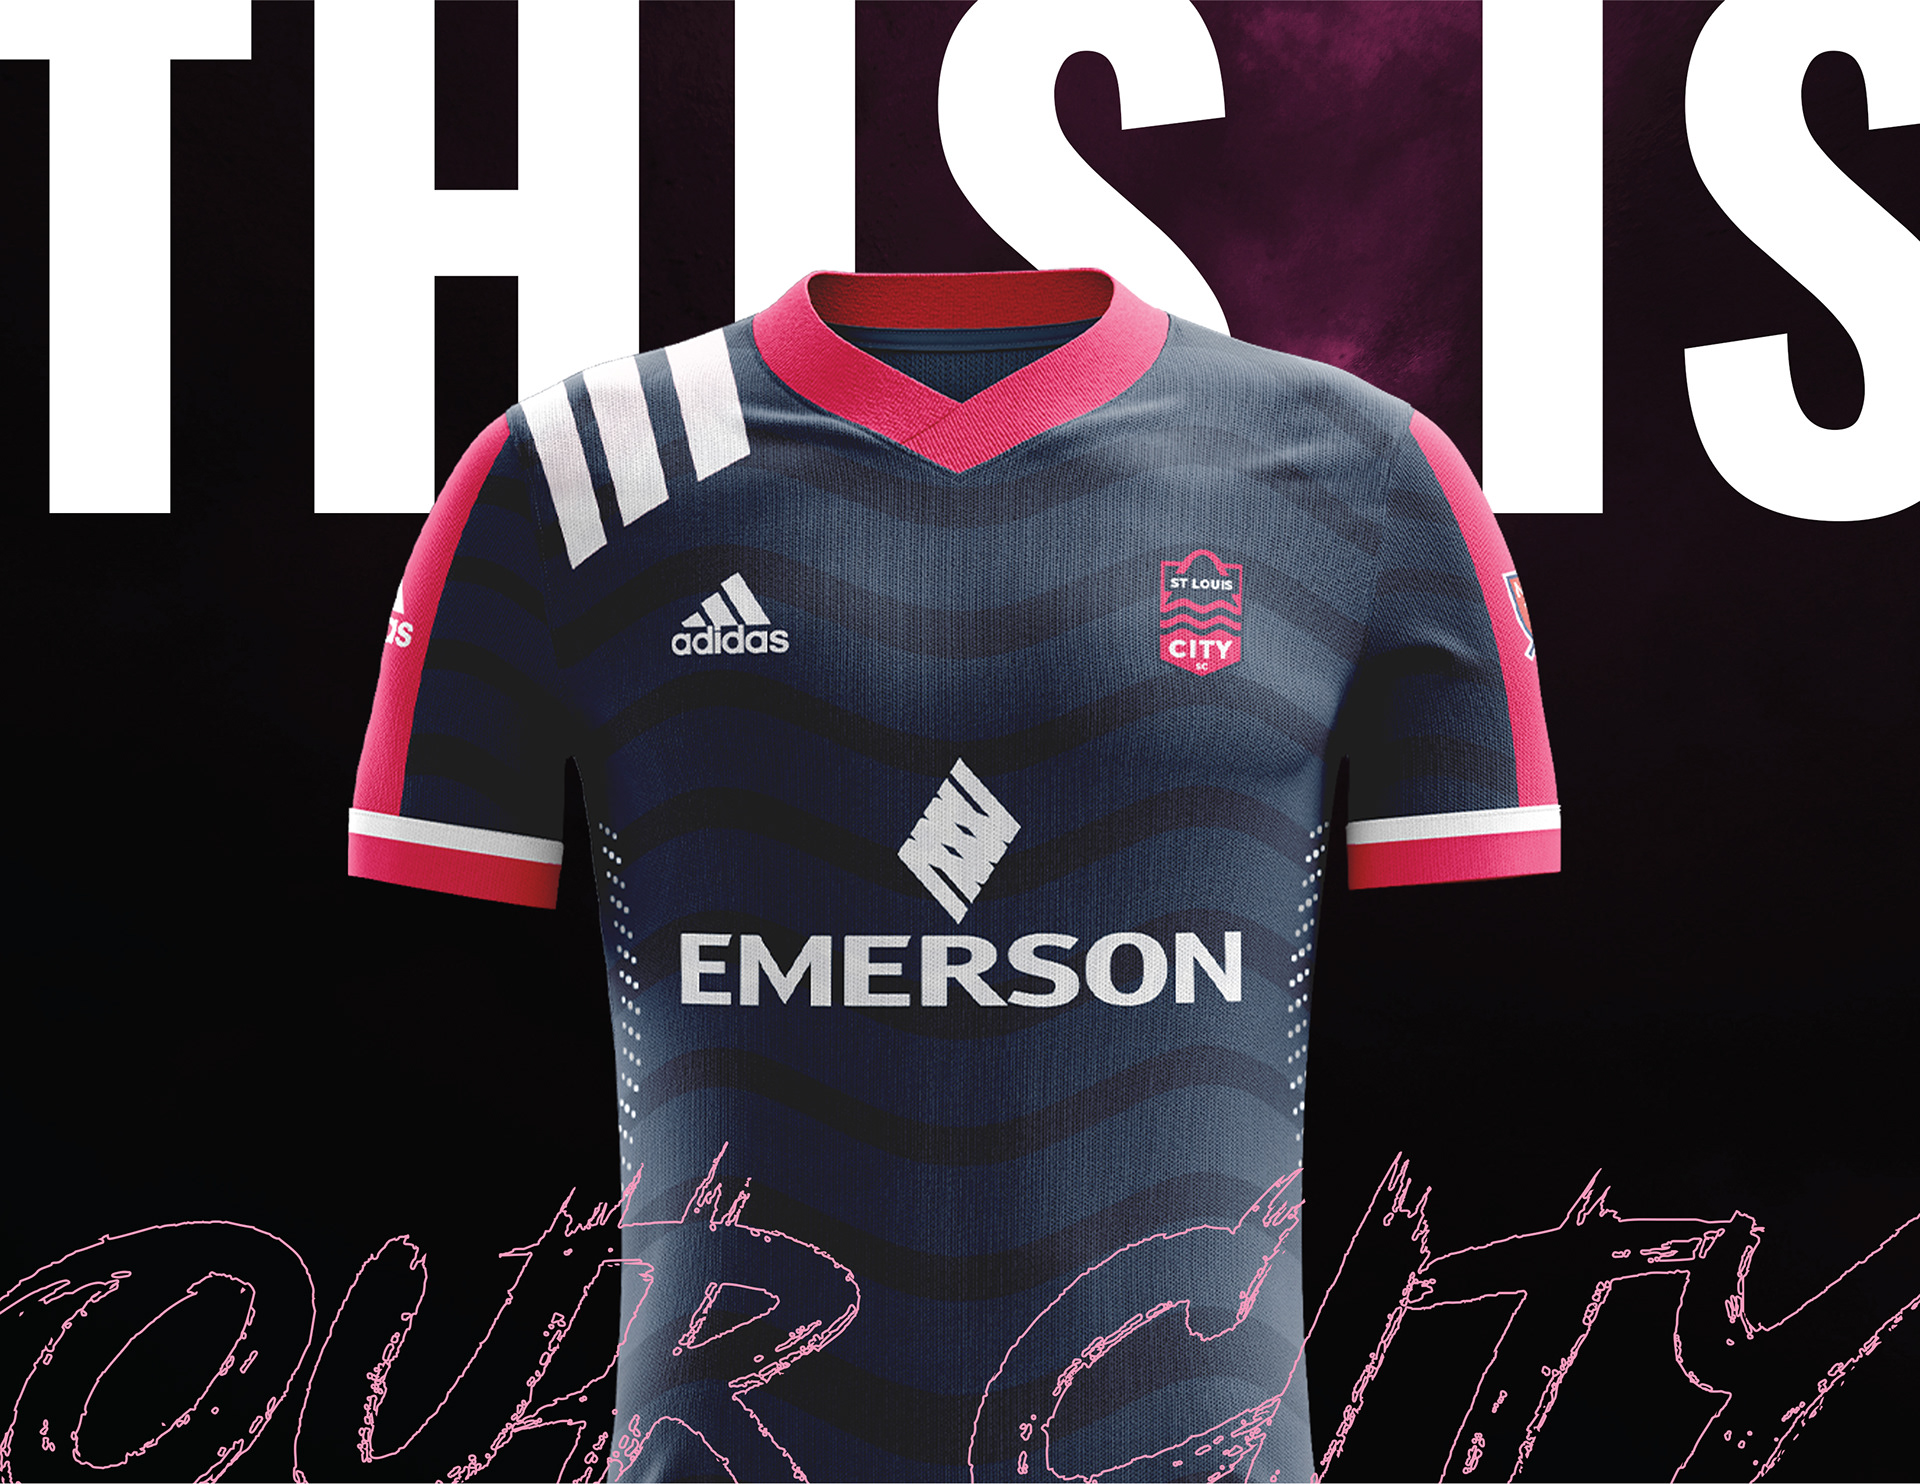 STL City SC uniform concept by FerryDesigns : r/MLS